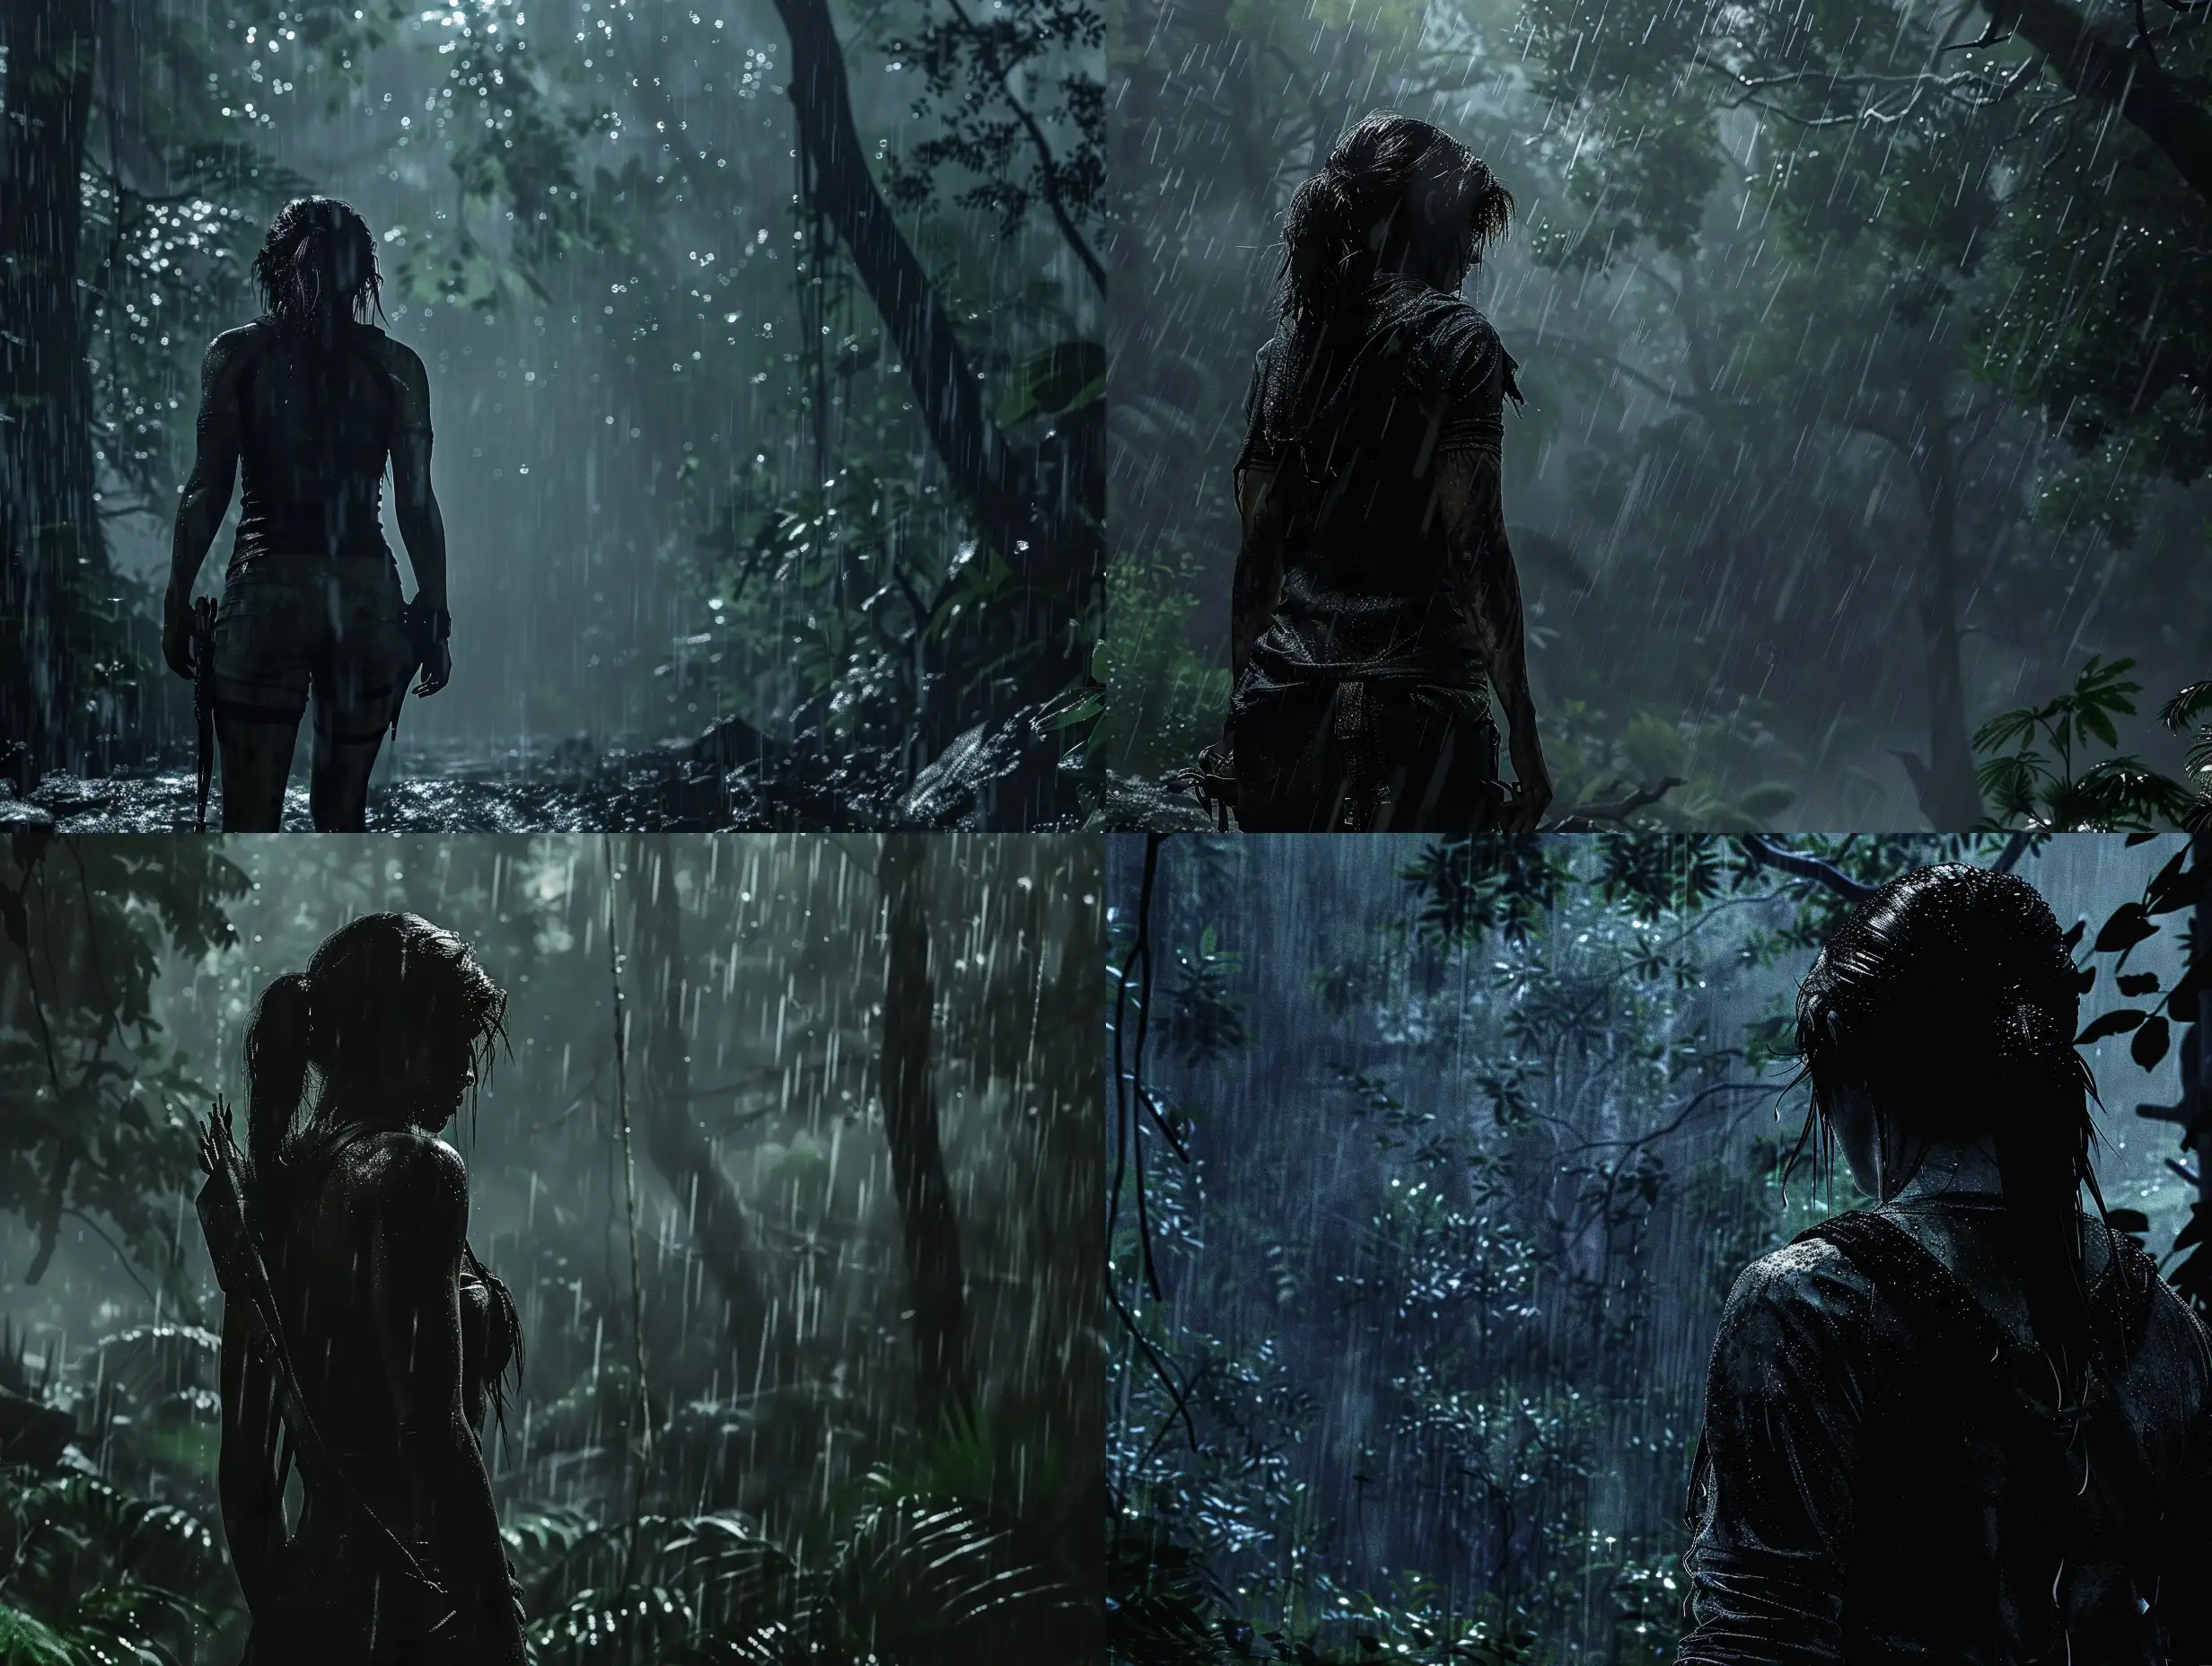 Lara-Croft-in-the-Dark-Forest-Rainy-Adventure-in-Ultra-Realistic-4K